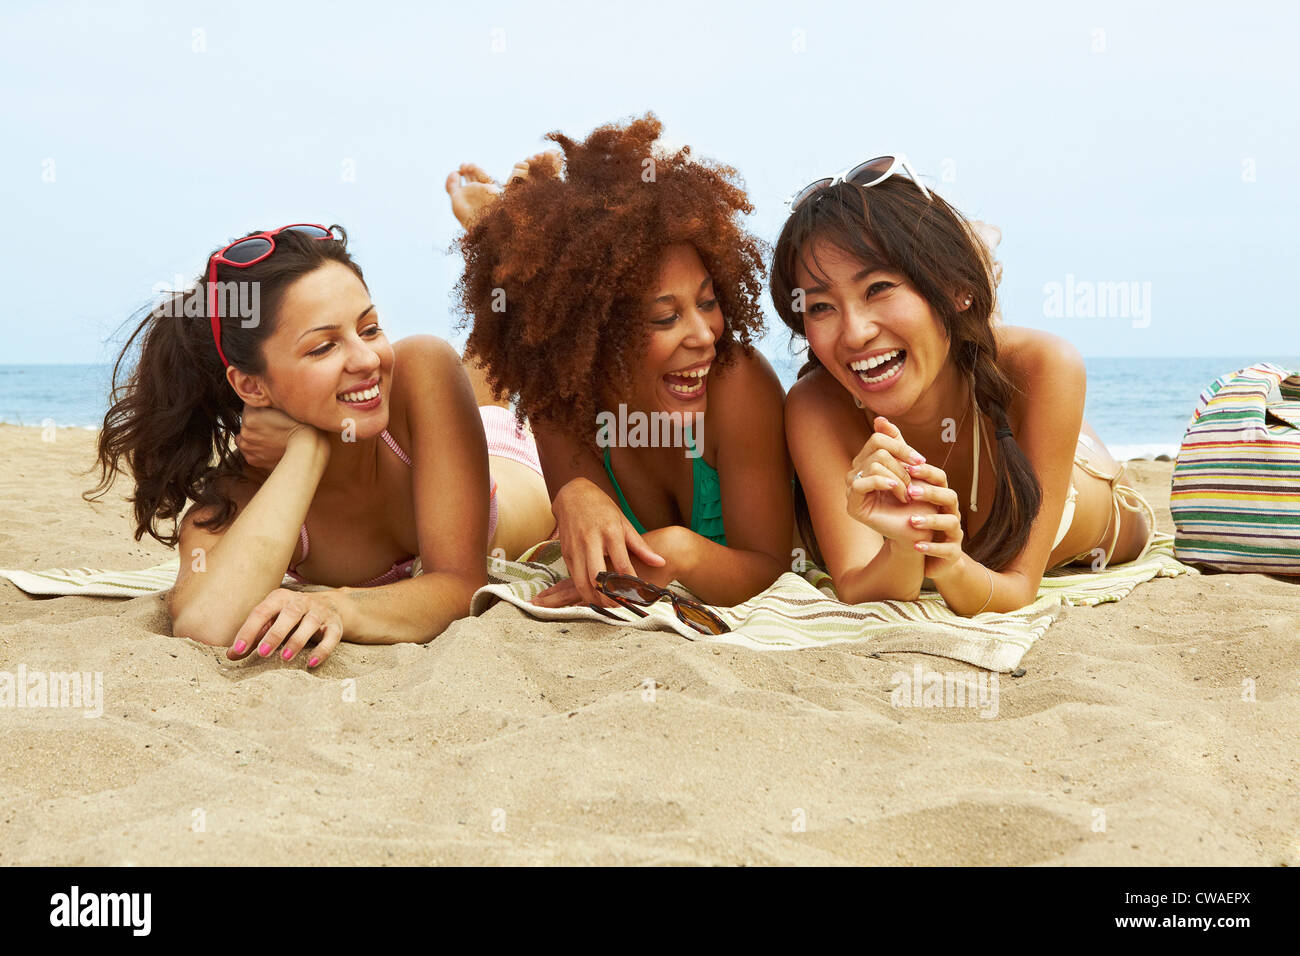 Young women sunbathing on beach Stock Photo